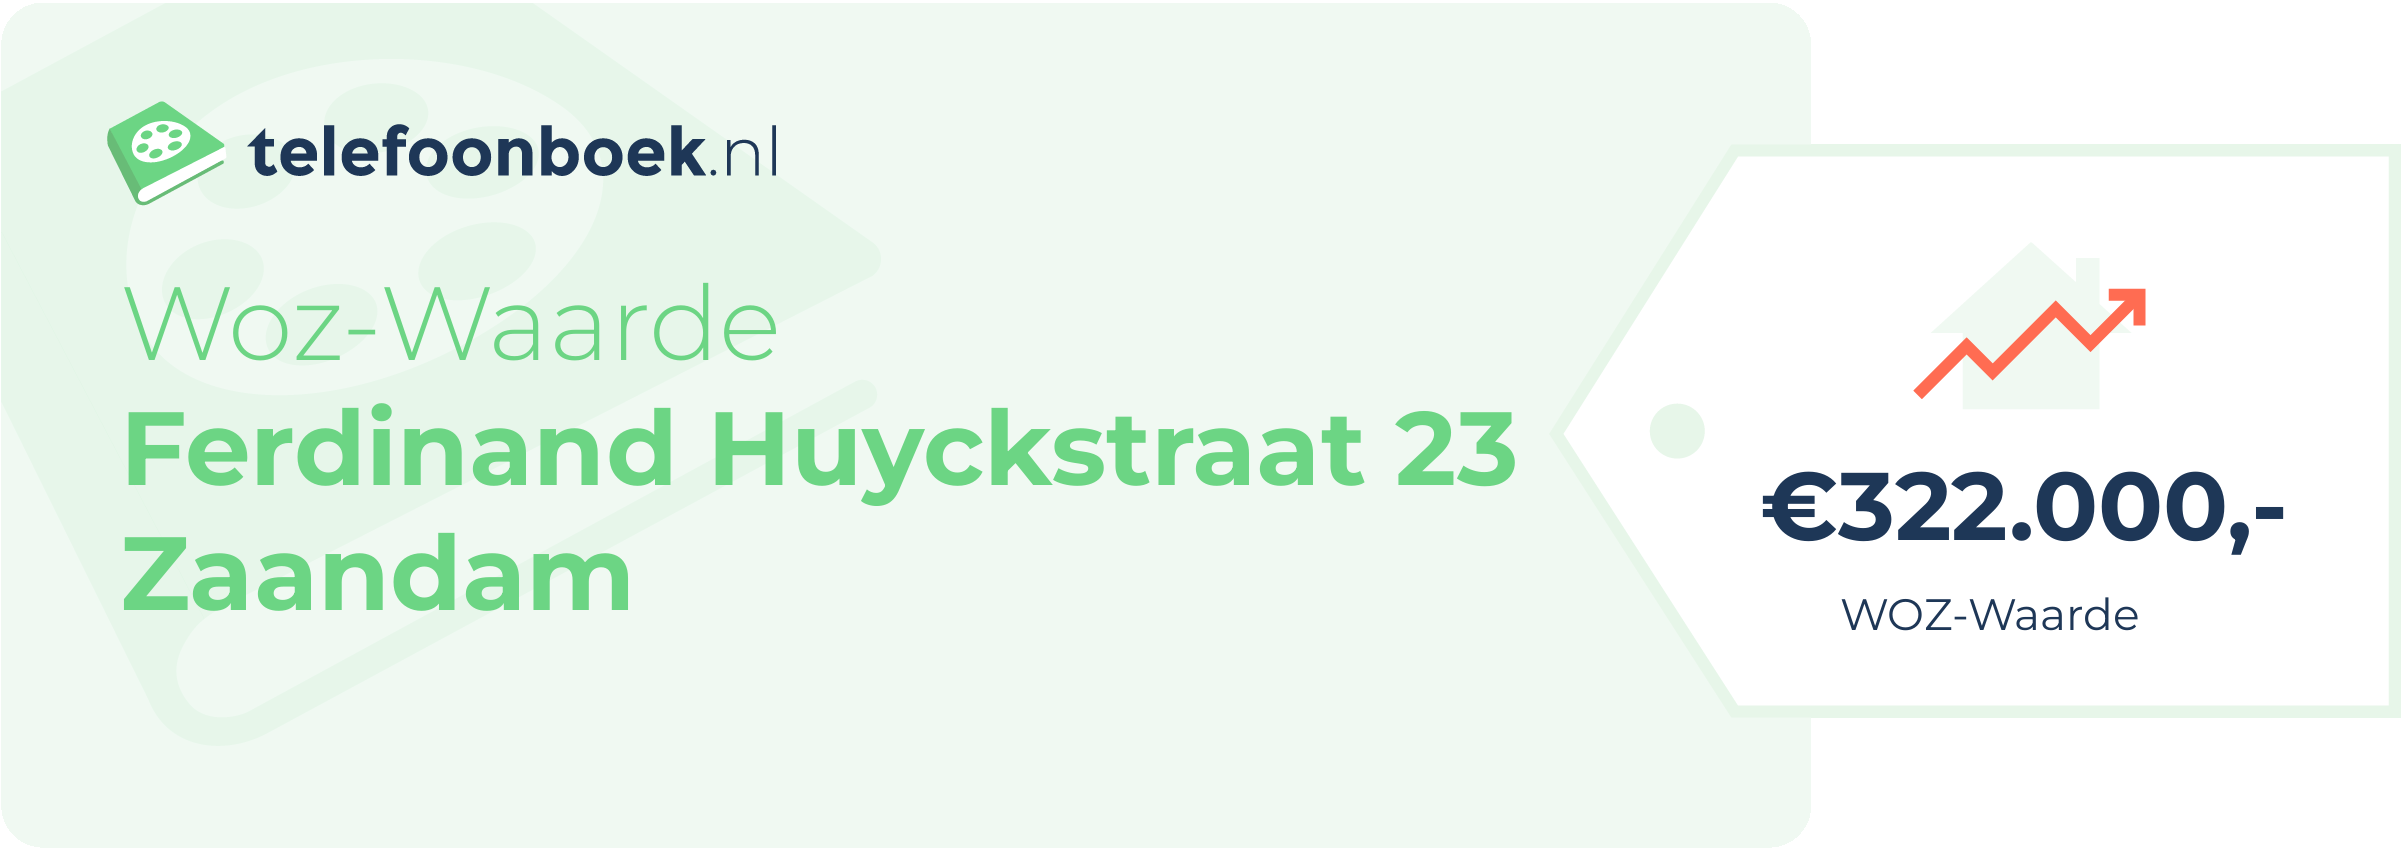 WOZ-waarde Ferdinand Huyckstraat 23 Zaandam